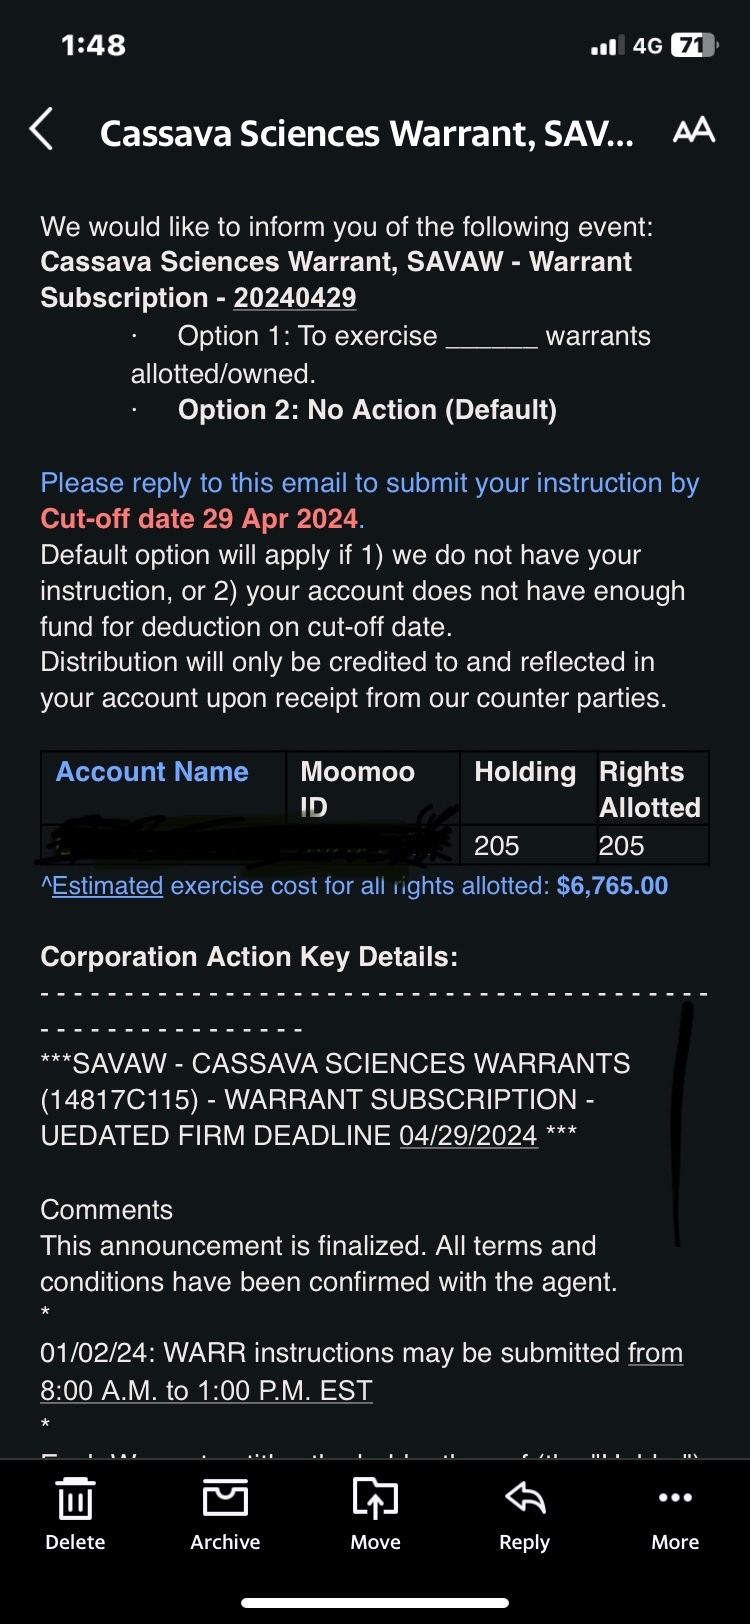 $Cassava Sciences Warrants (SAVAW.US)$ 收到这个email,应该怎样处理呢？谢谢邦忙！